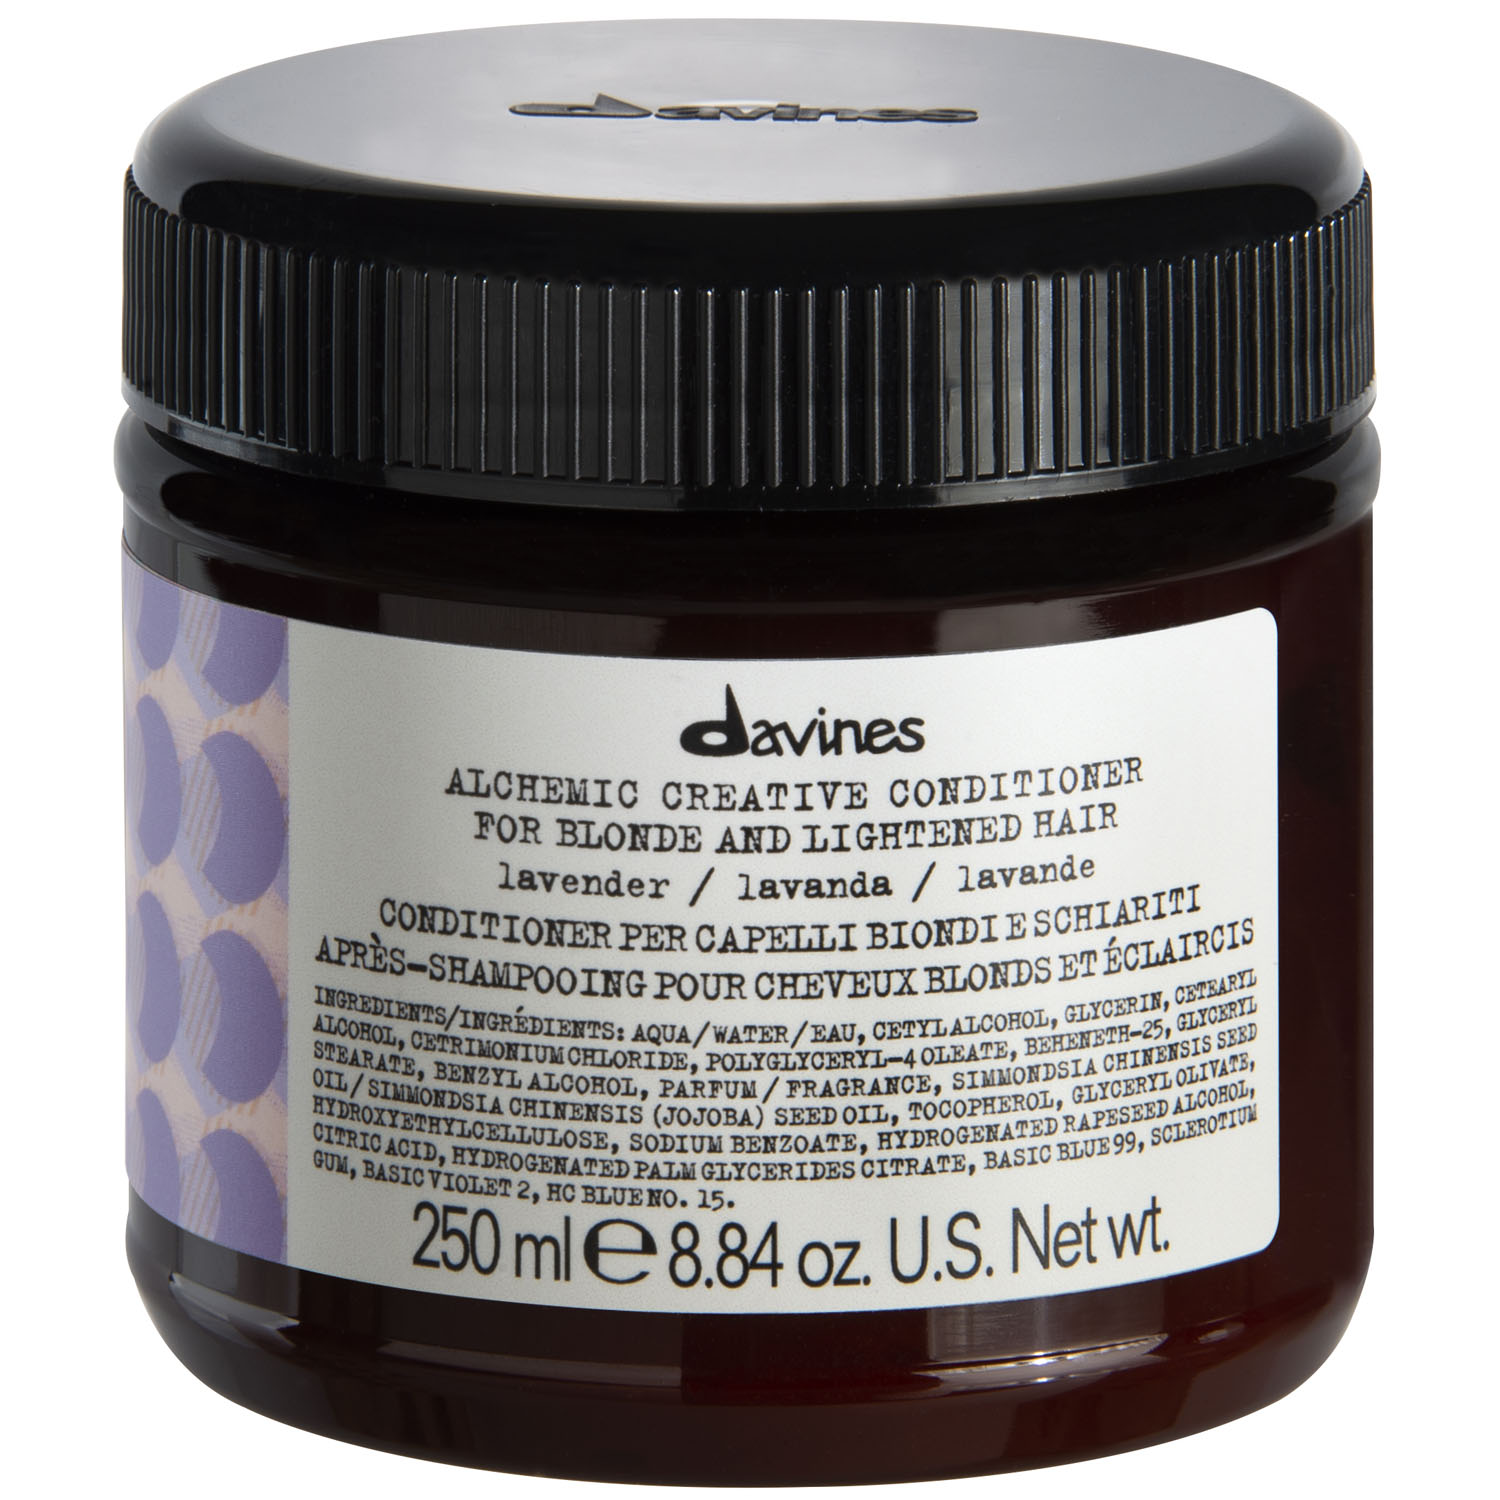 Davines Кондиционер для осветленных и натуральных волос (лавандовый) Creative Conditioner For Blond And Lightened Hair Lavender, 250 мл (Davines, Alchemic)